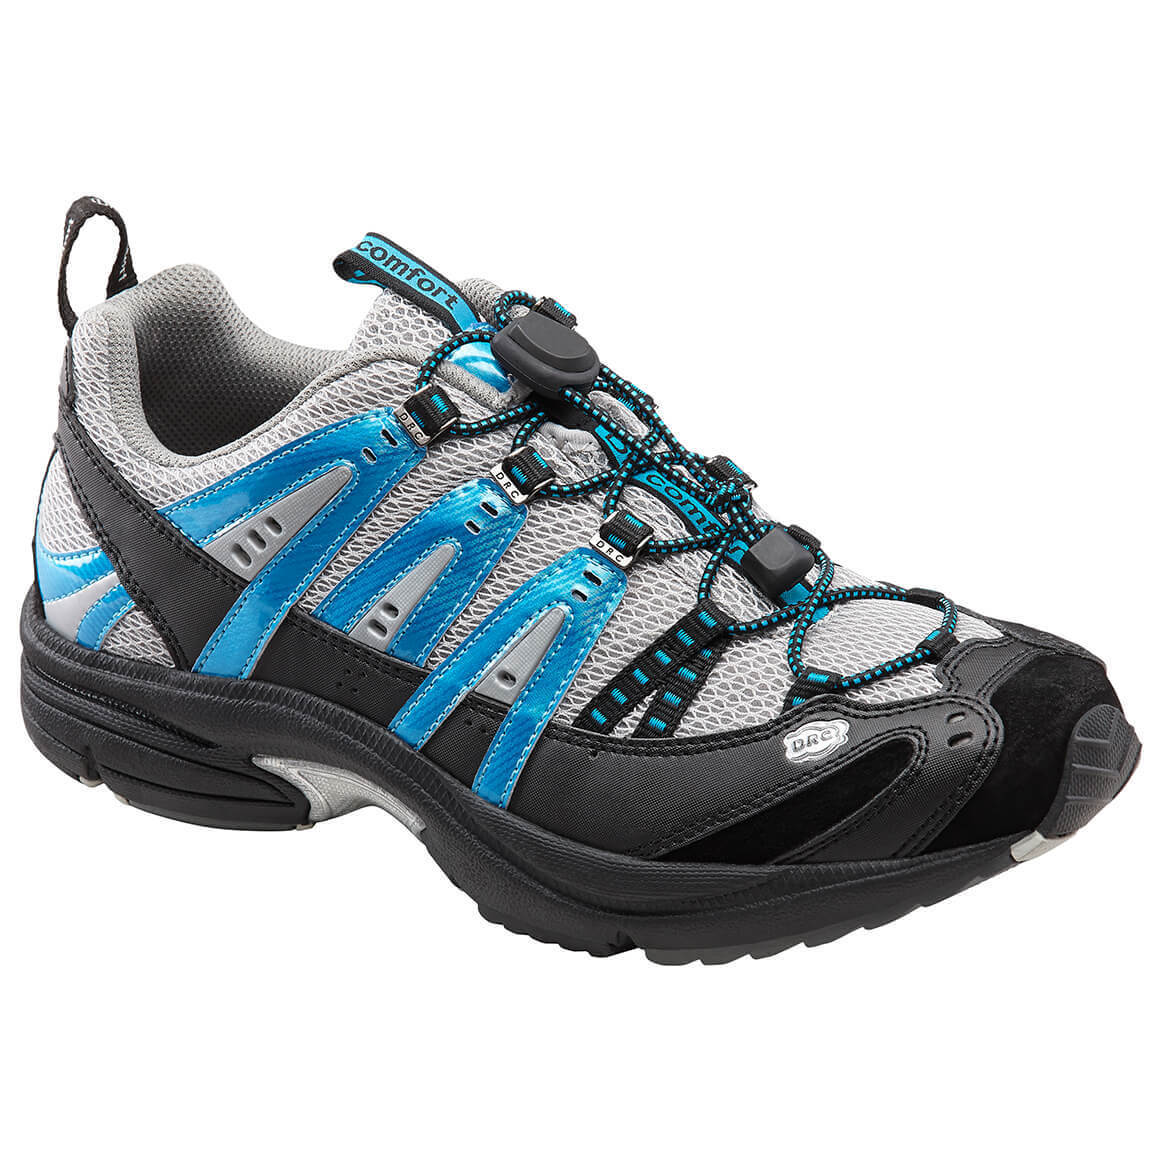 Dr. Comfort Performance Men's Athletic Shoe-15W-Metallic Blue - image 1 of 1